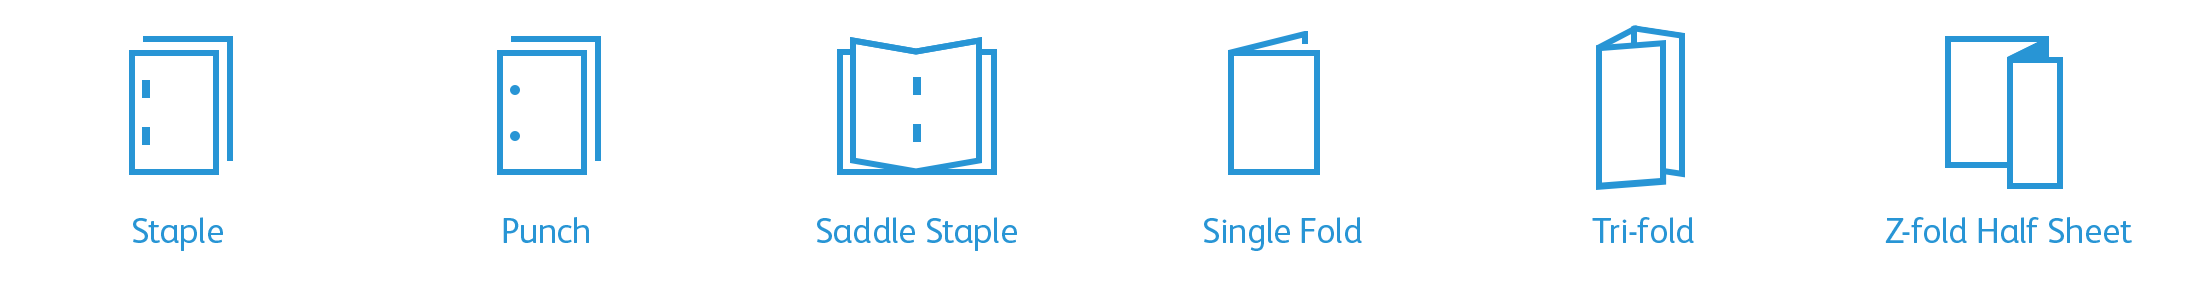 Staple / Punch / Saddle Staple / Single Fold / Tri-fold / Z-fold Half Sheet